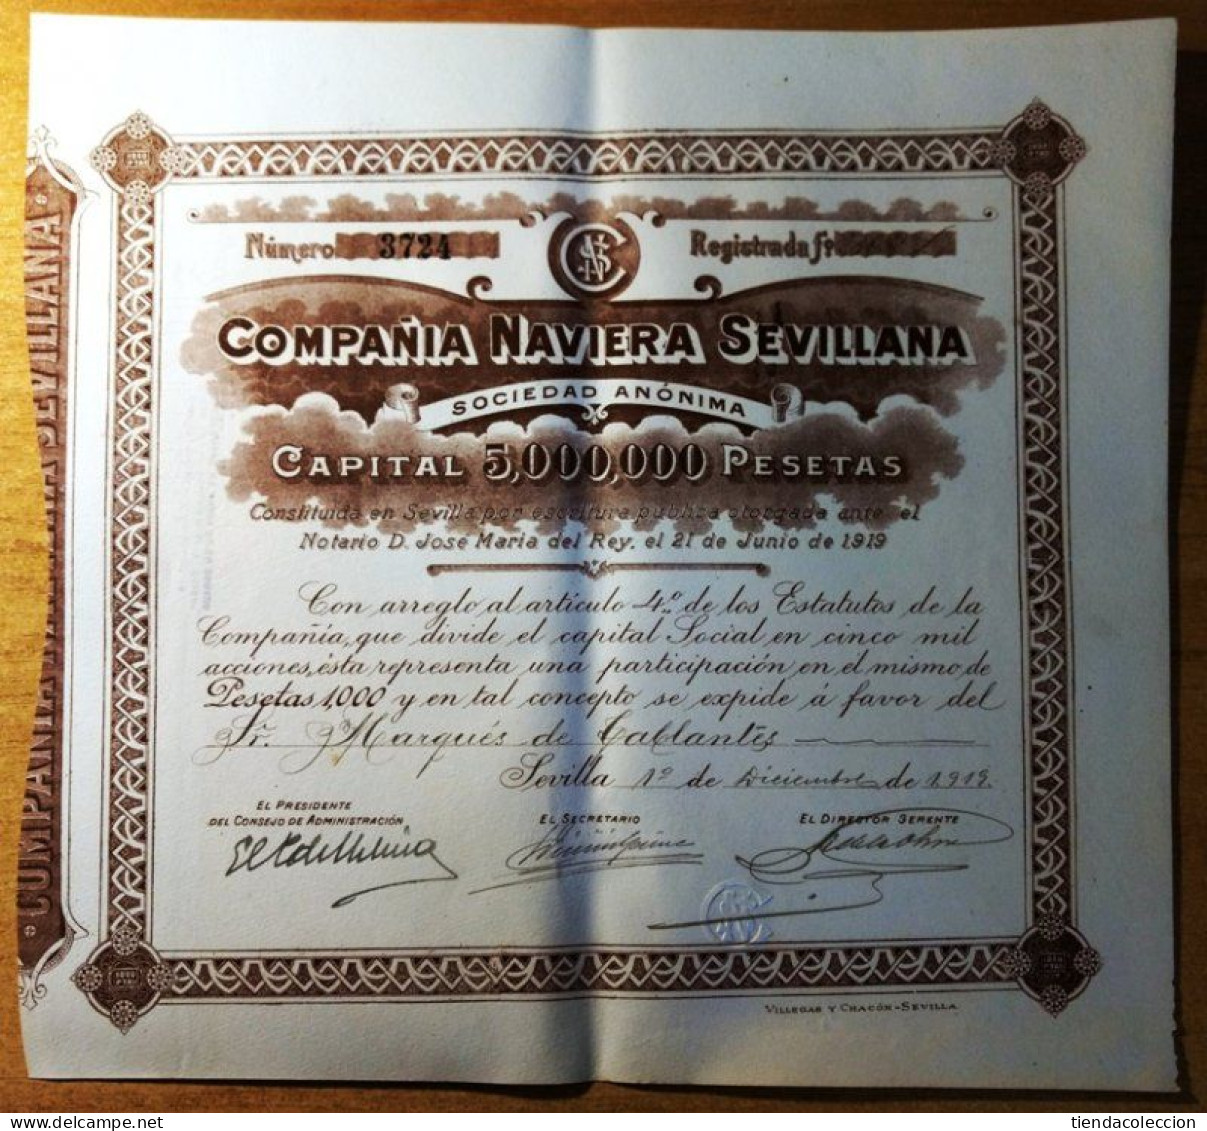 Compañía Naviera Sevillana - Navy